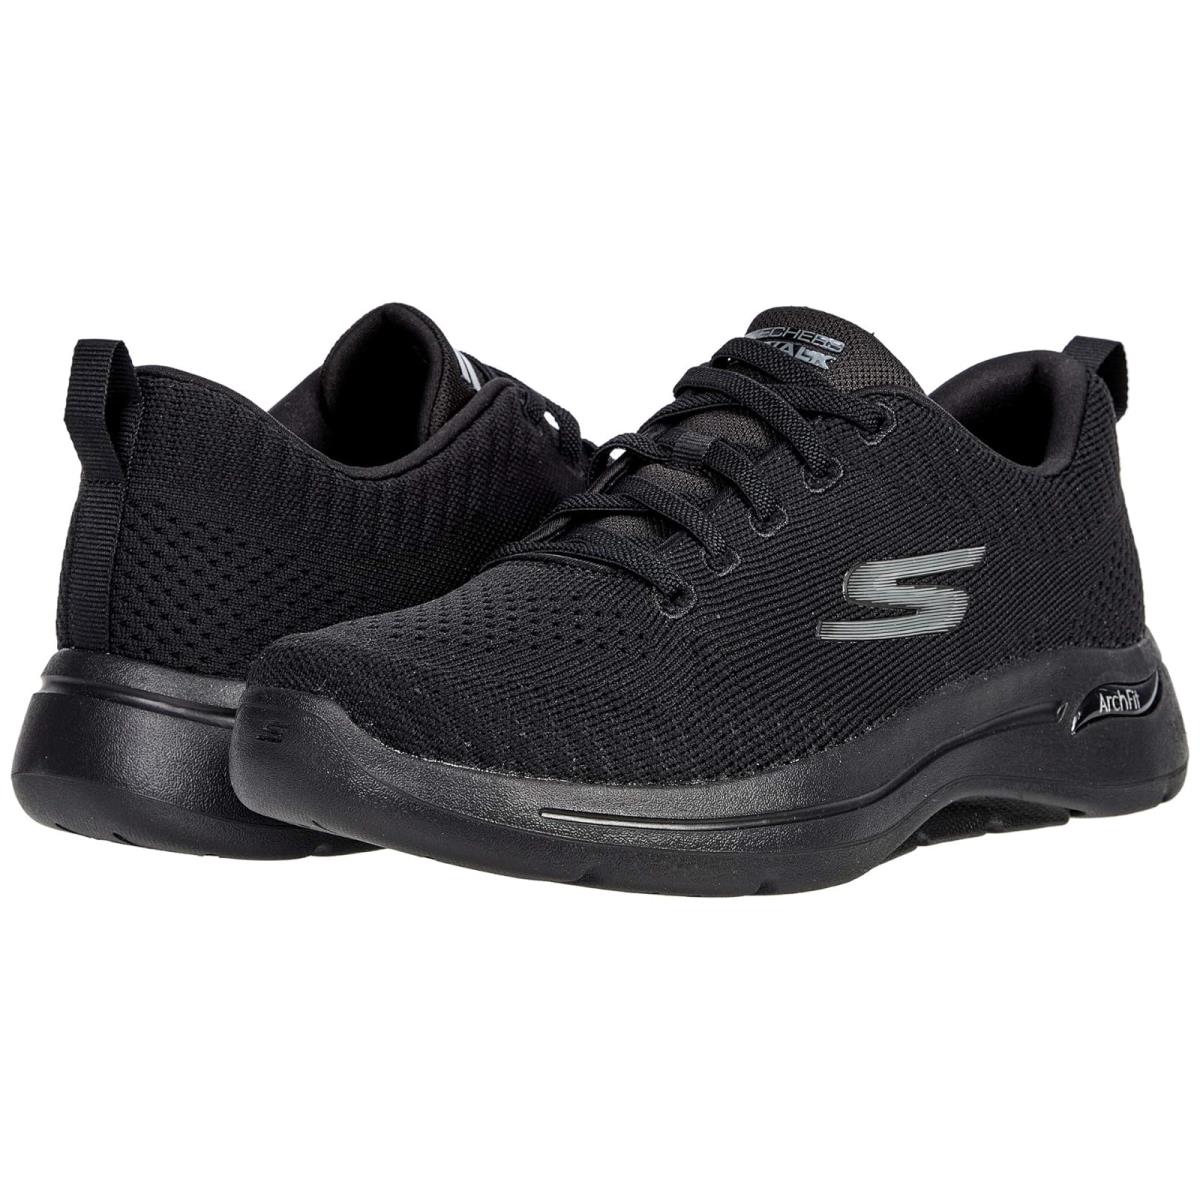 Man`s Shoes Skechers Performance Go Walk Arch Fit - 216126 Black